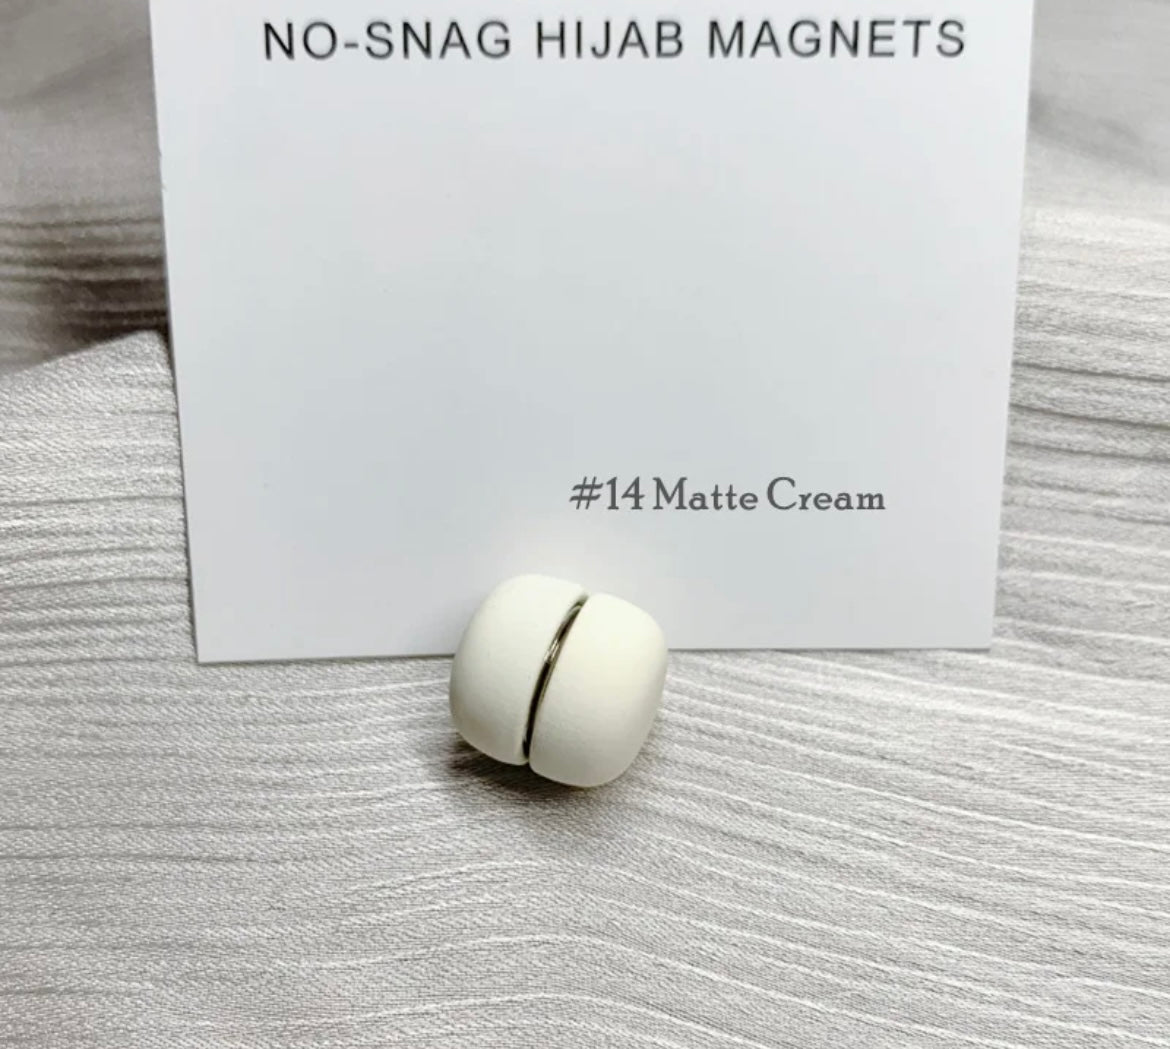 2 PAIRS Hijab Magnets